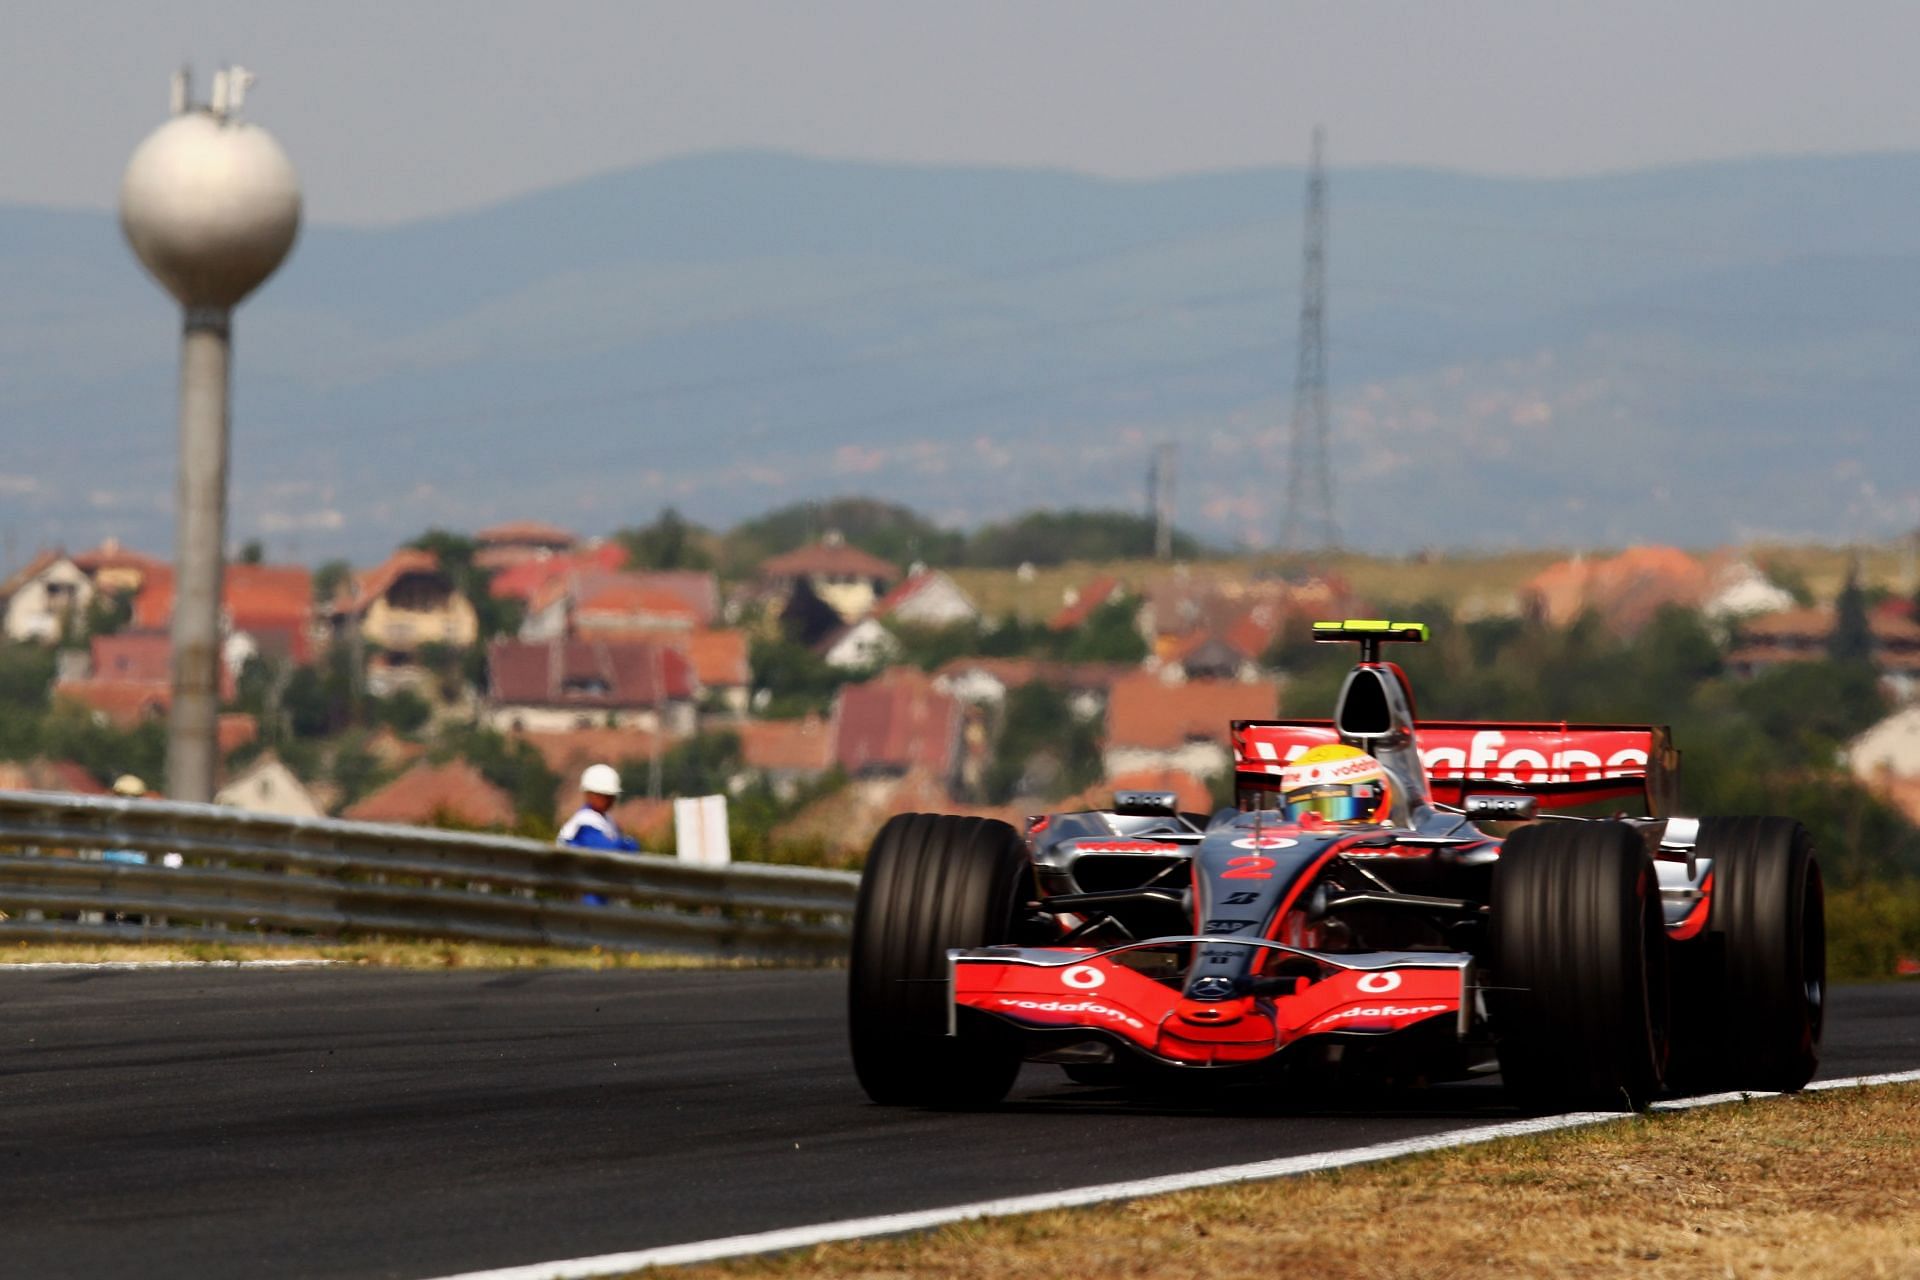 Hungarian F1 Grand Prix - Lewis Hamilton takes on the Hungaroring